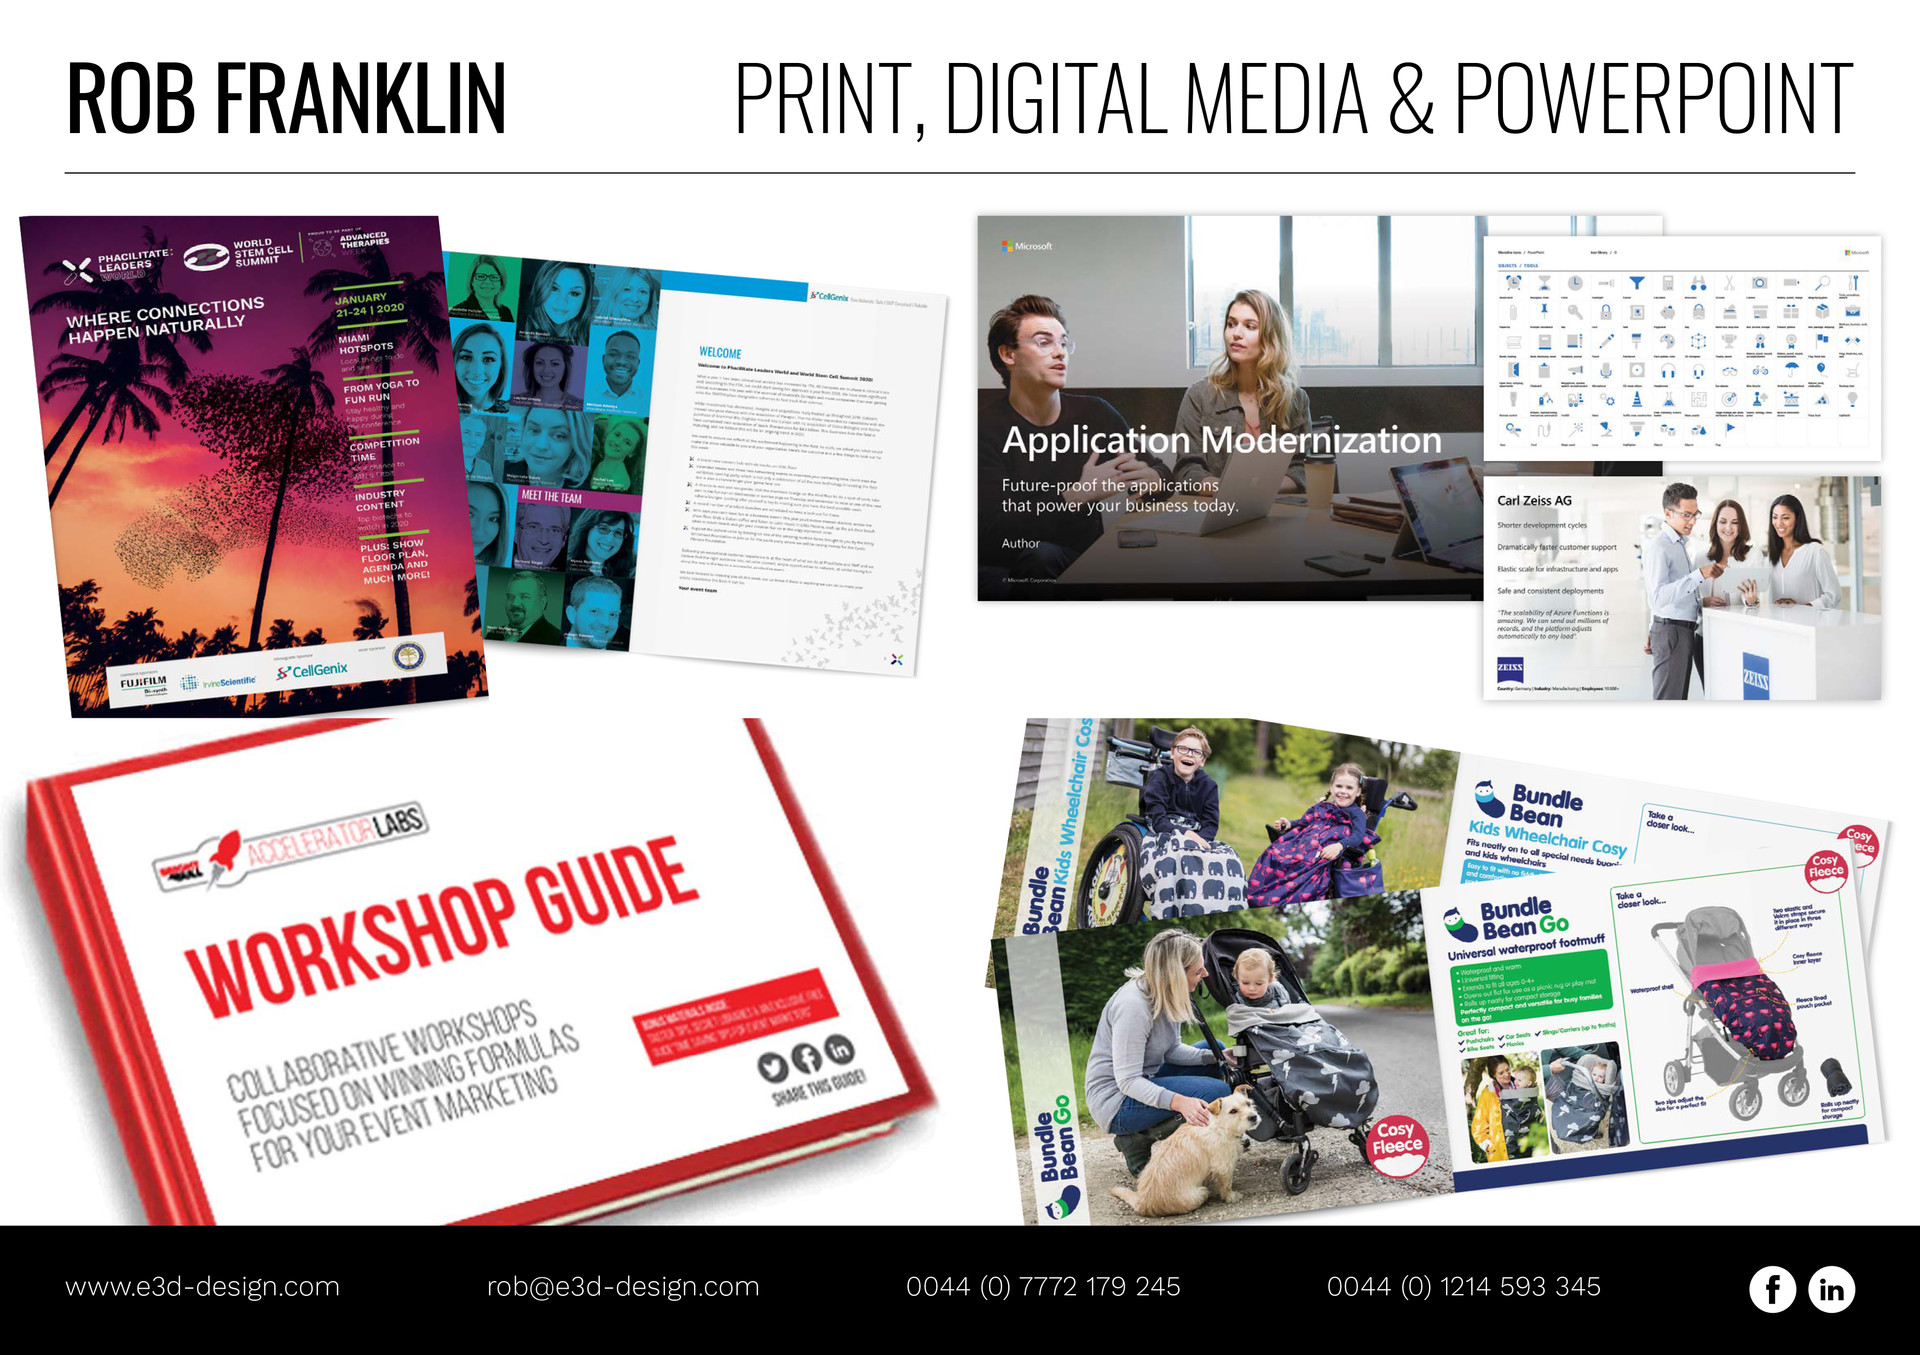 Print, Digital Advertising and PowerPoint Presentations